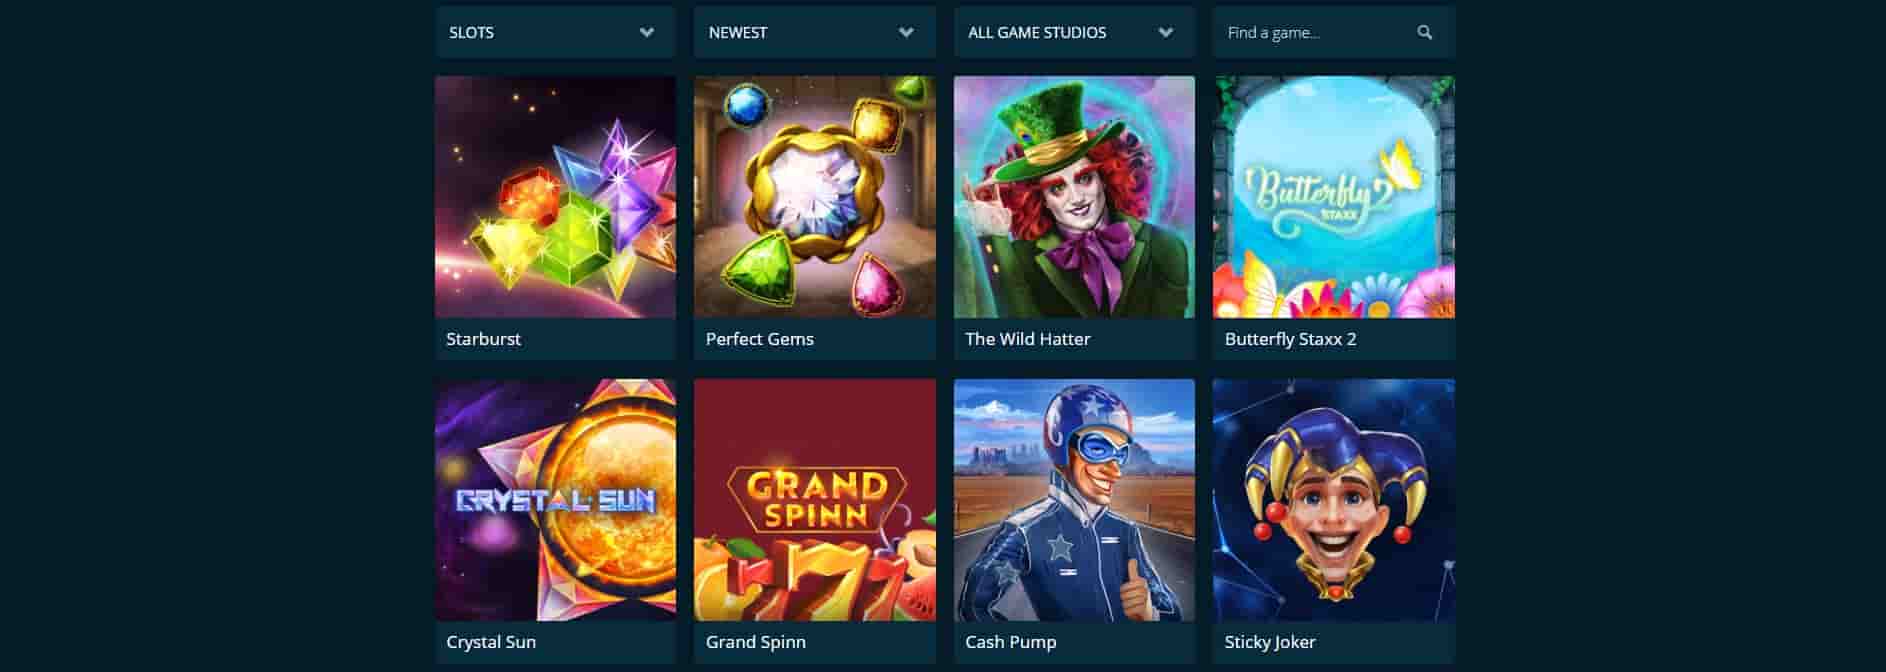 Casino land games variety